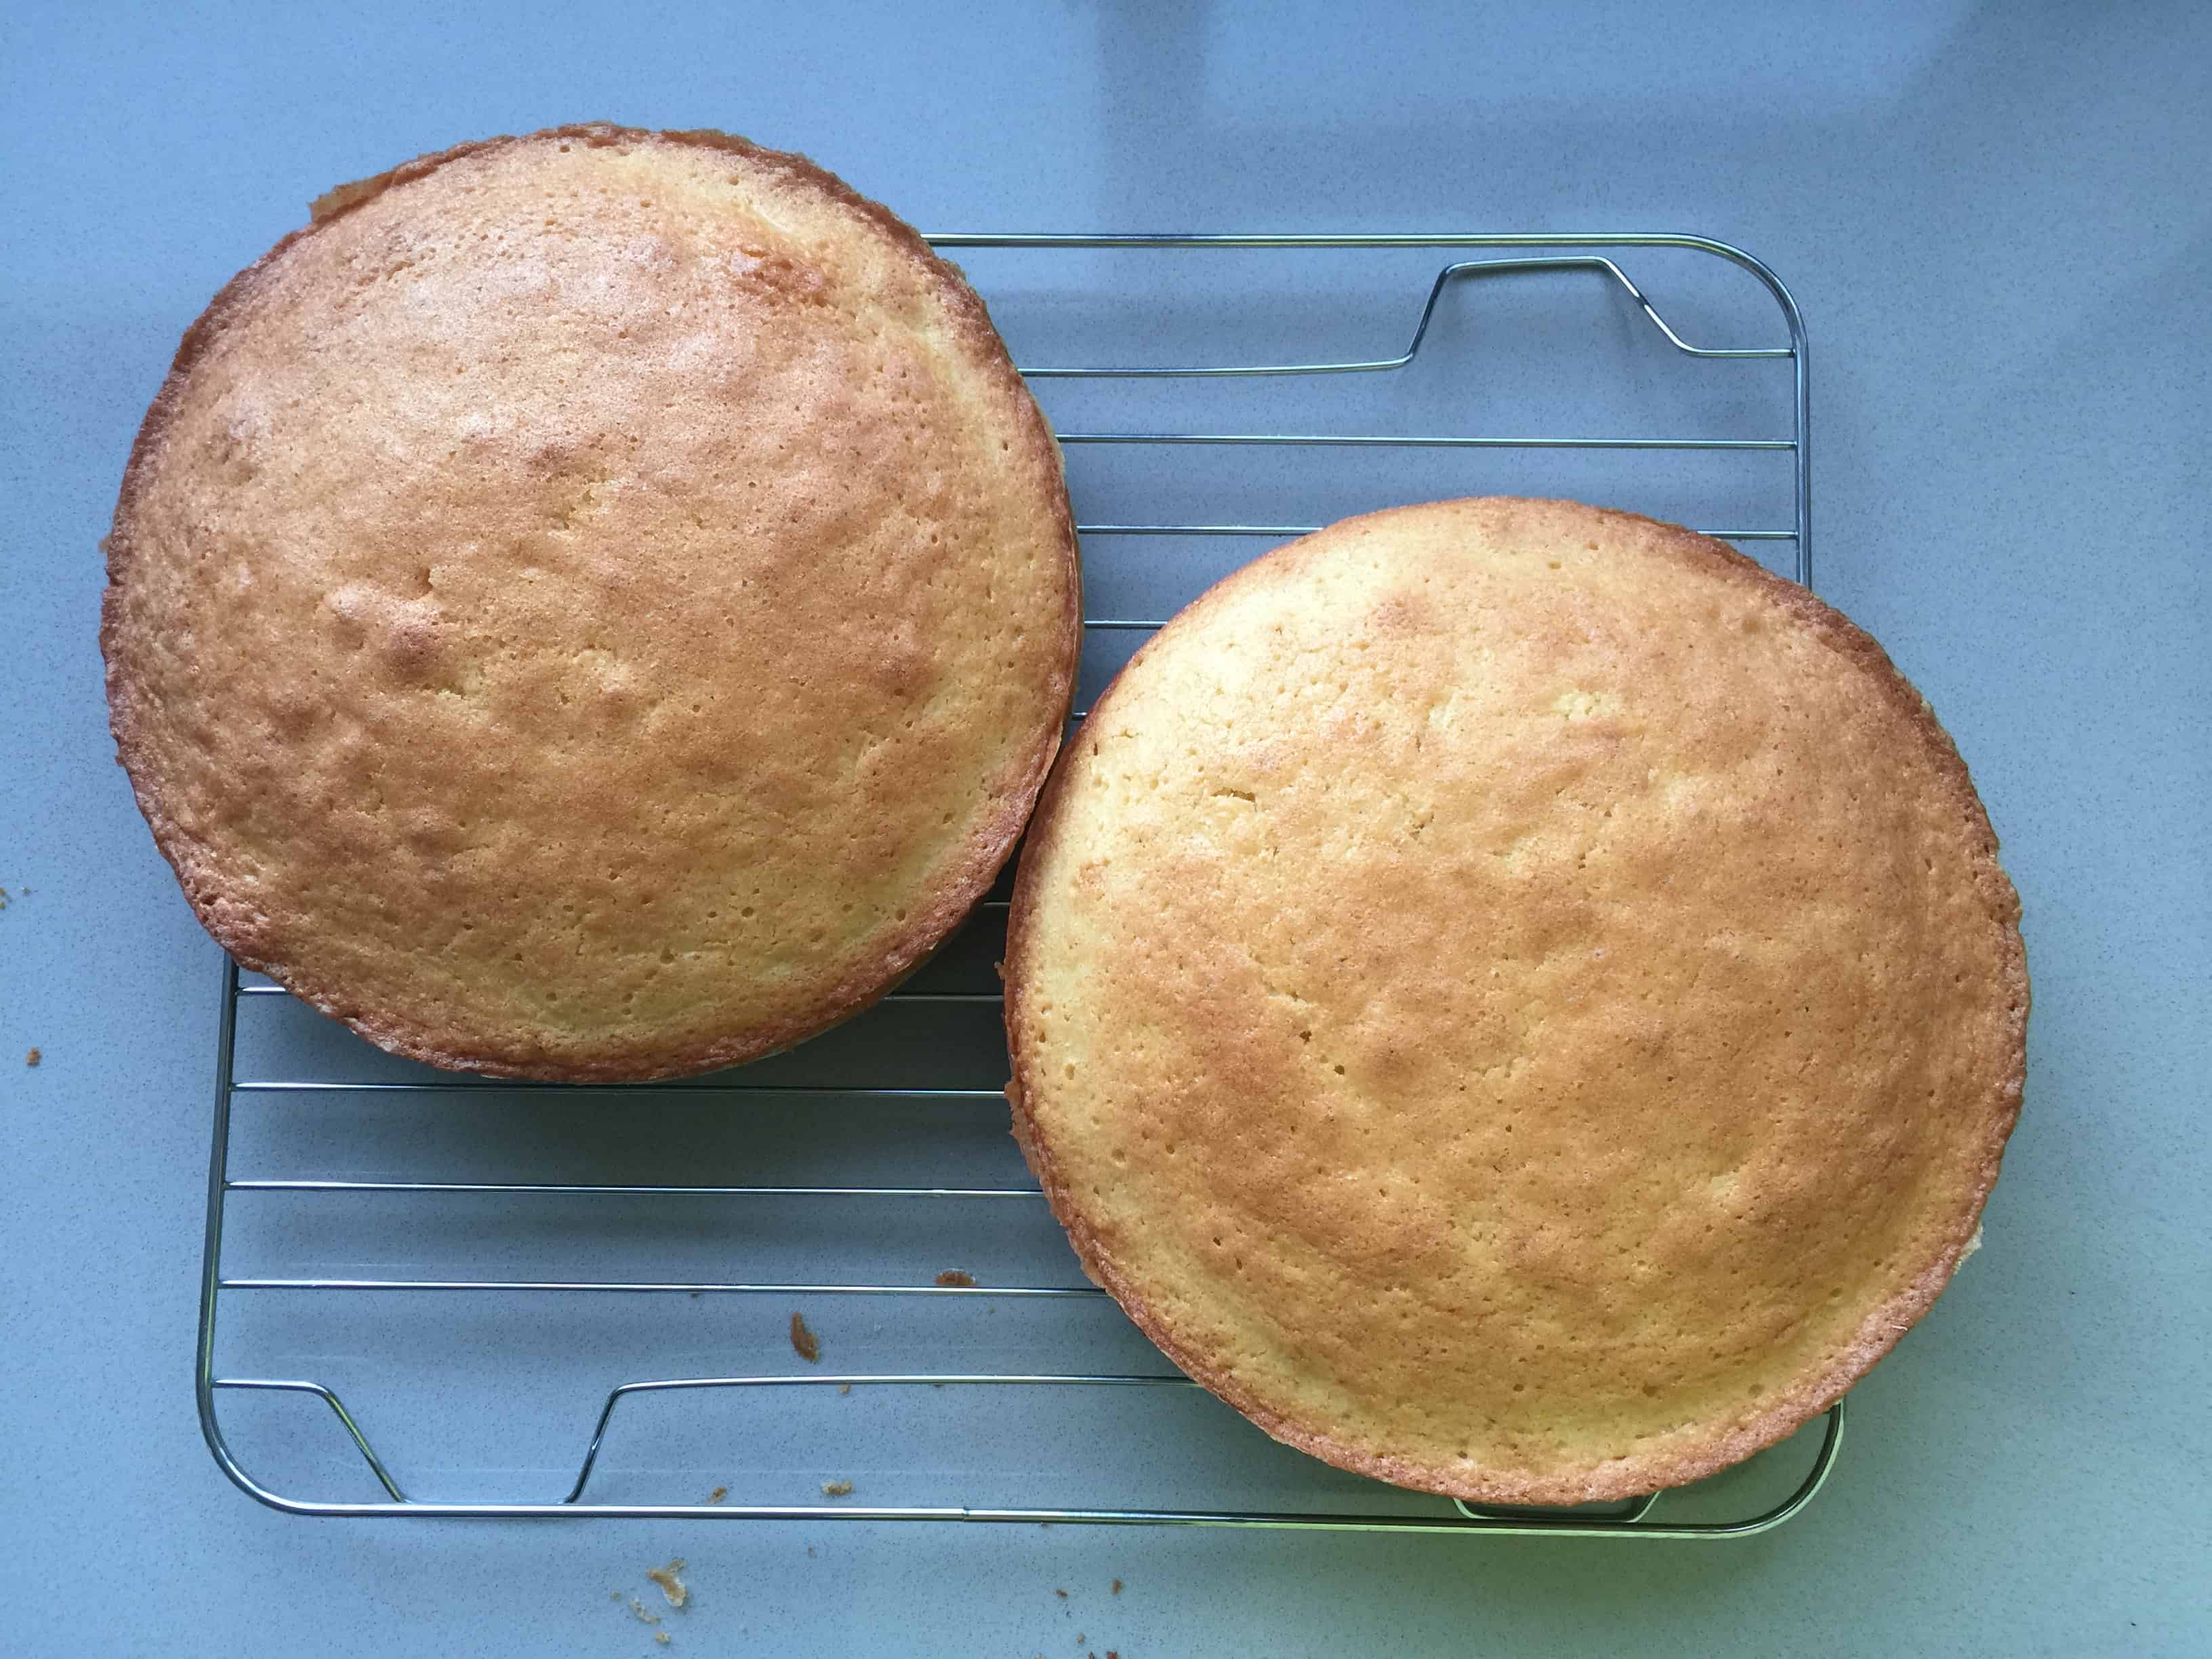 two baked sponge cakes